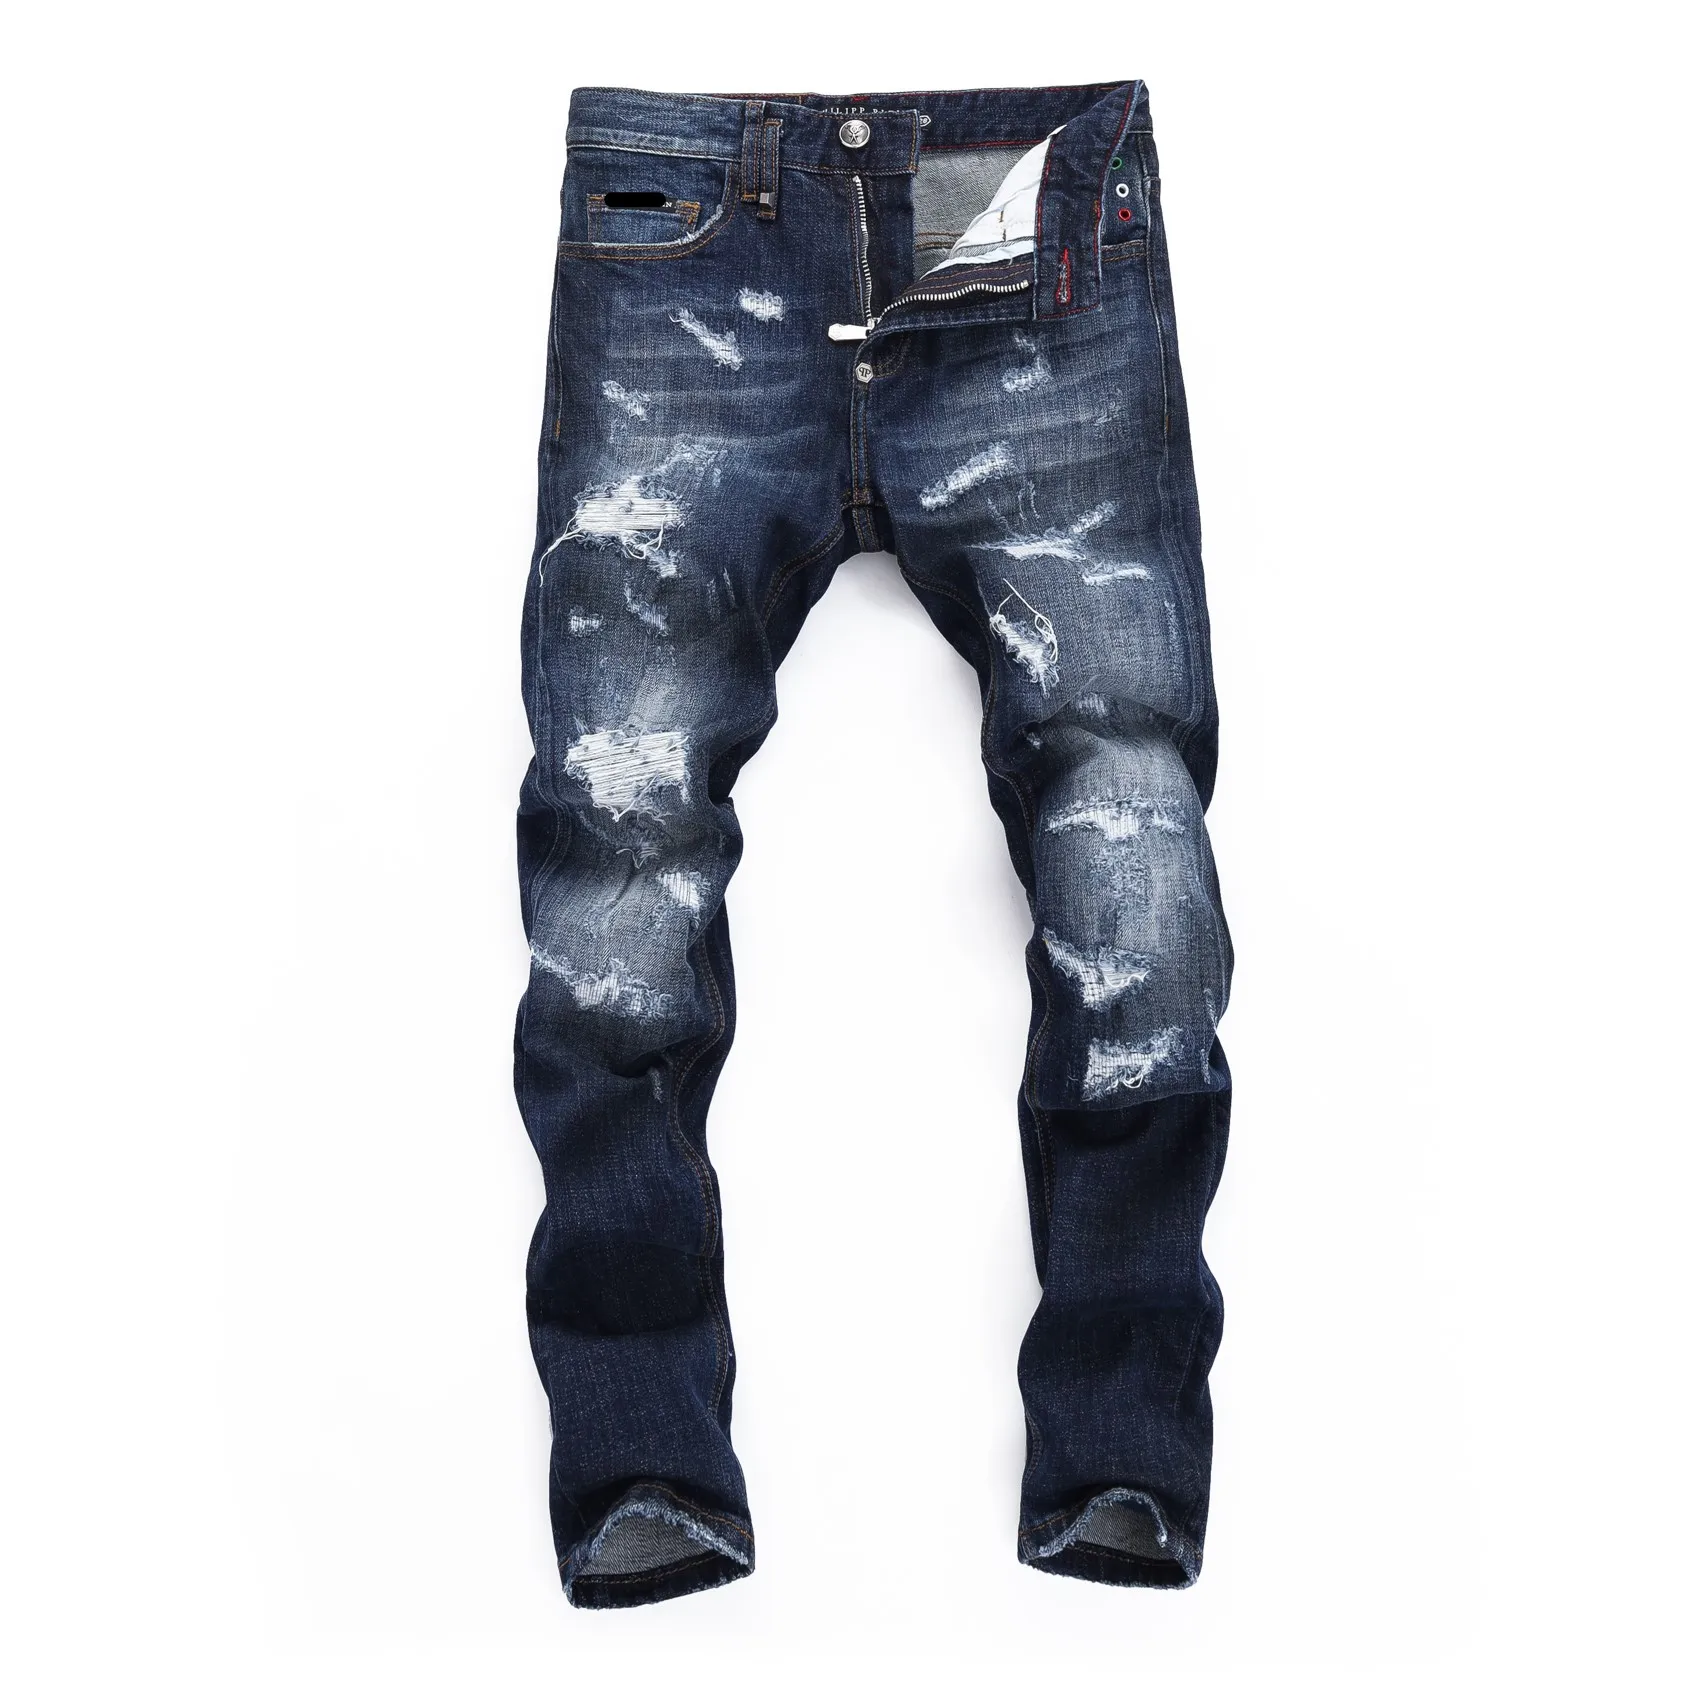 Baggy Jeans Denim Jeans Stacked Jeansdesig - Buy Jeans Men Mens Shorts ...